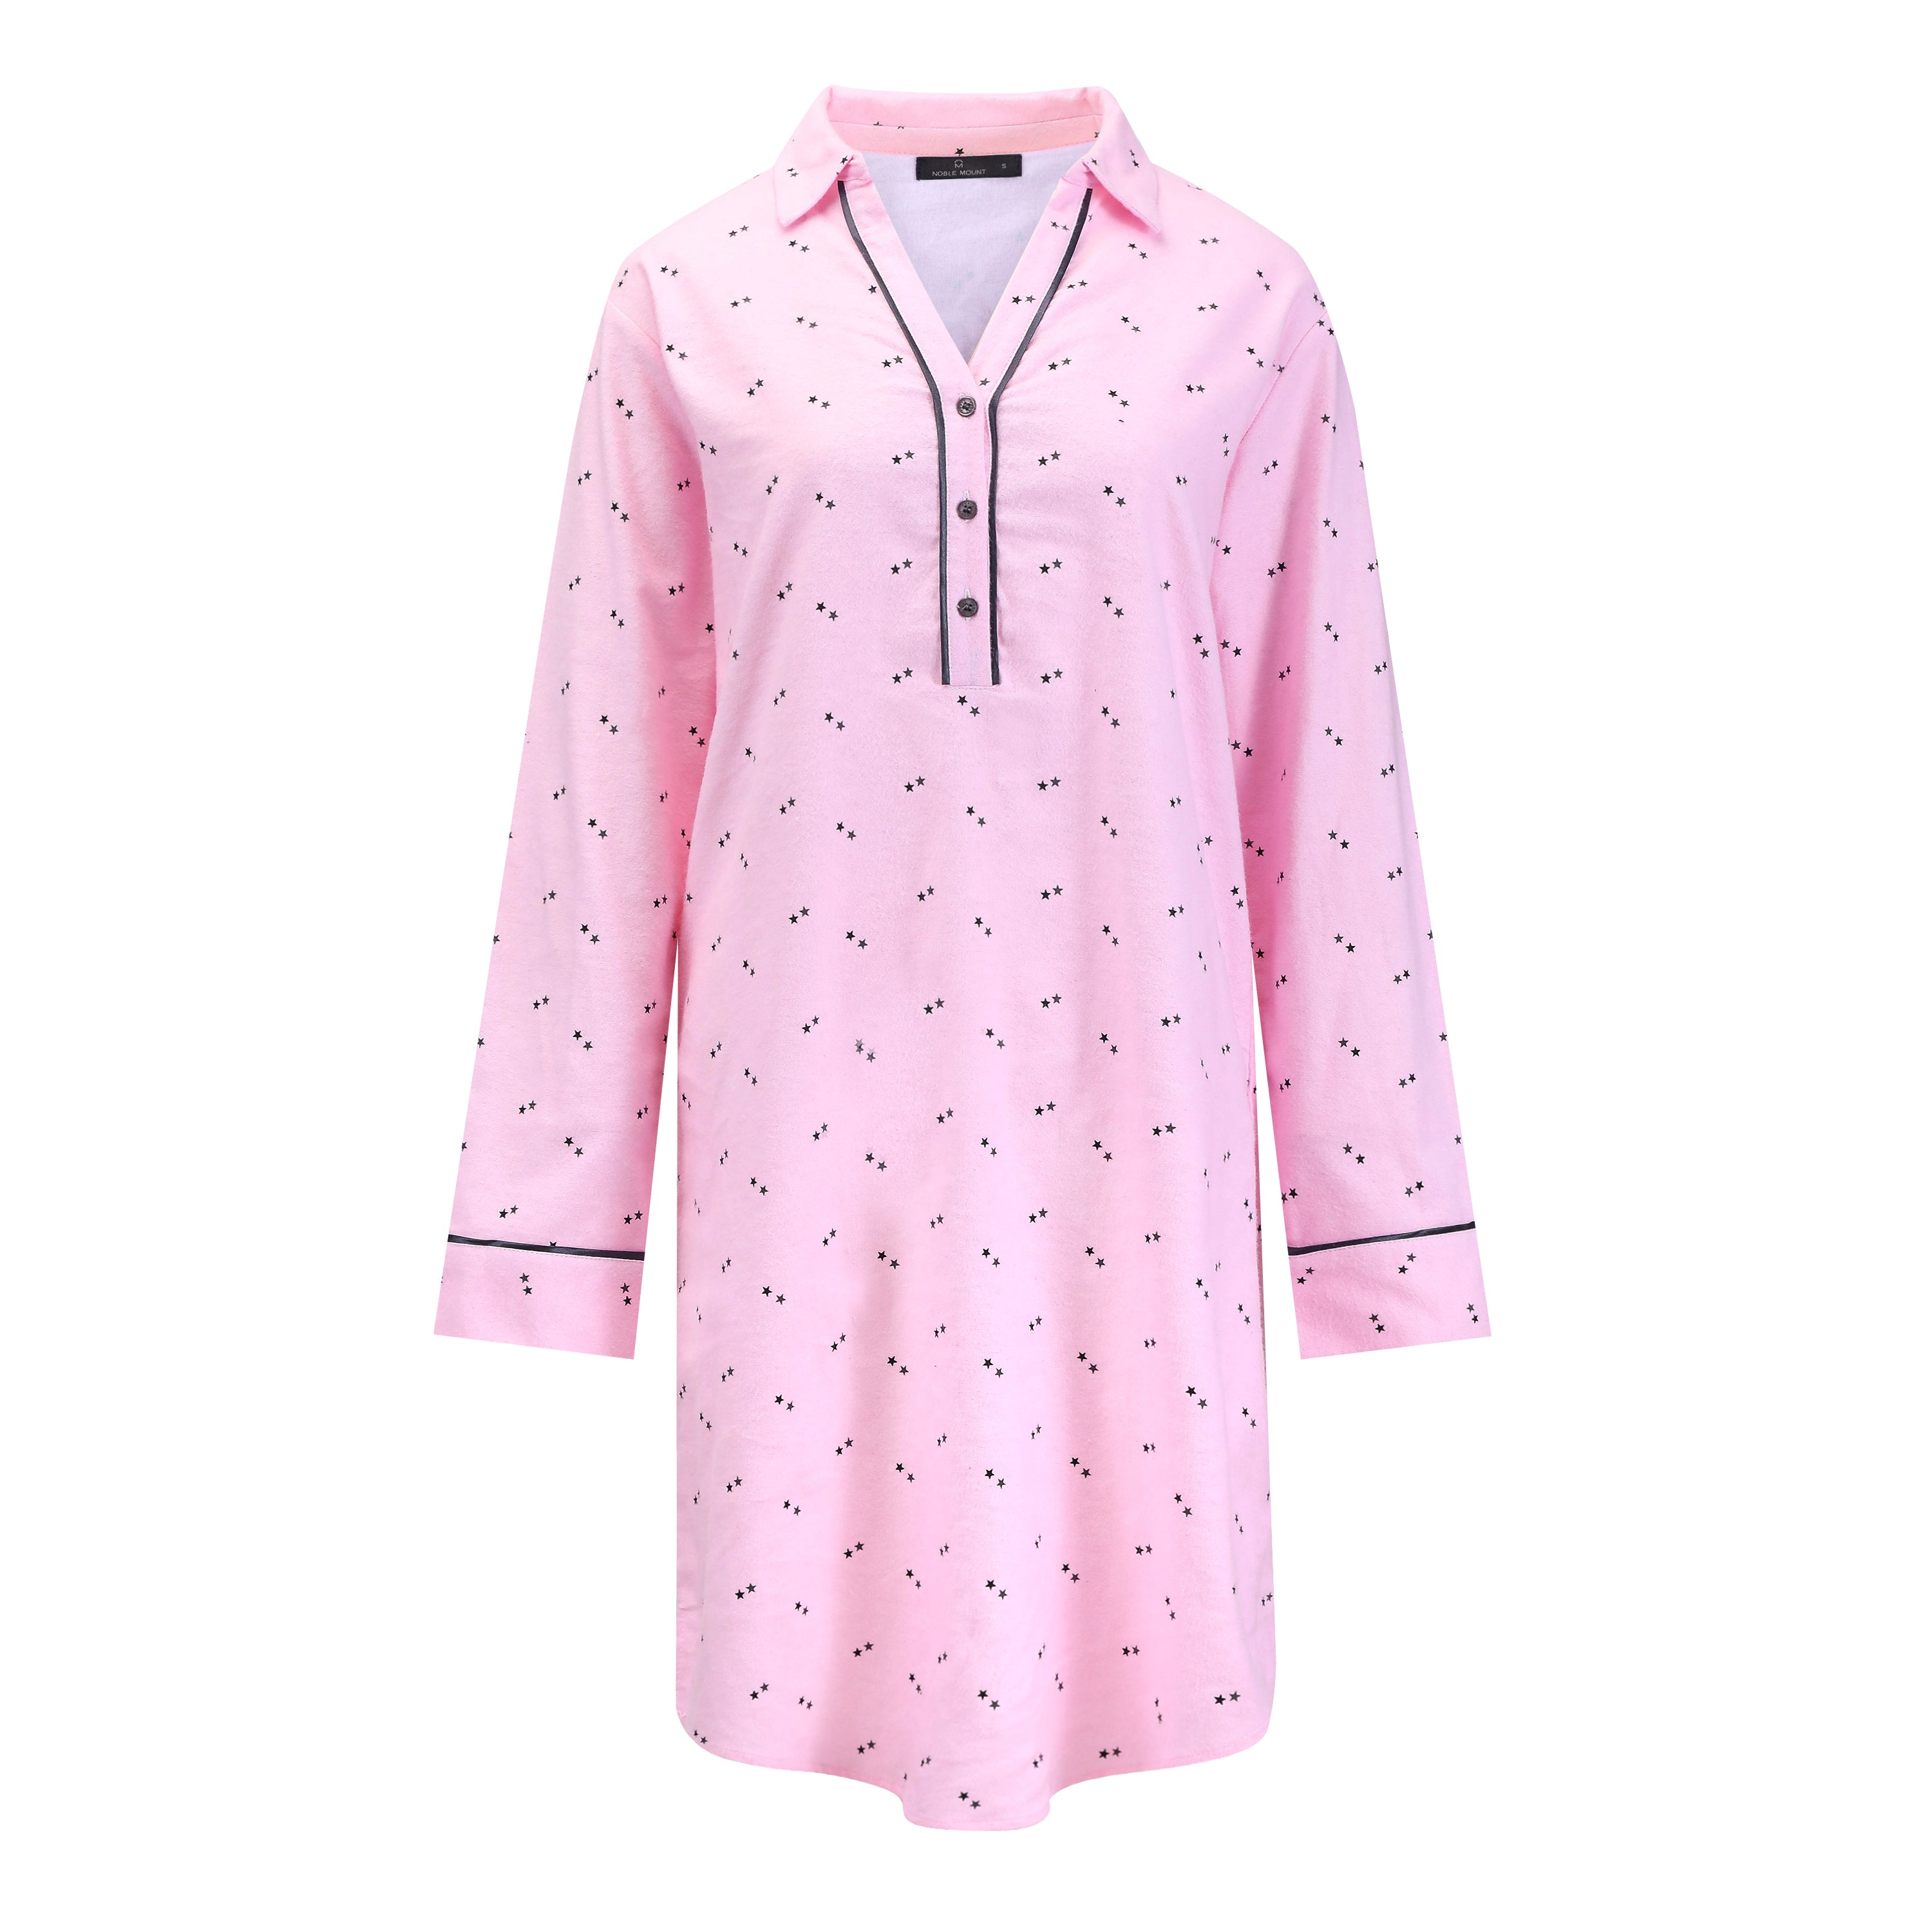 Noble Mount Womens Premium 100% Cotton Flannel Long Sleeve Sleep Shirt